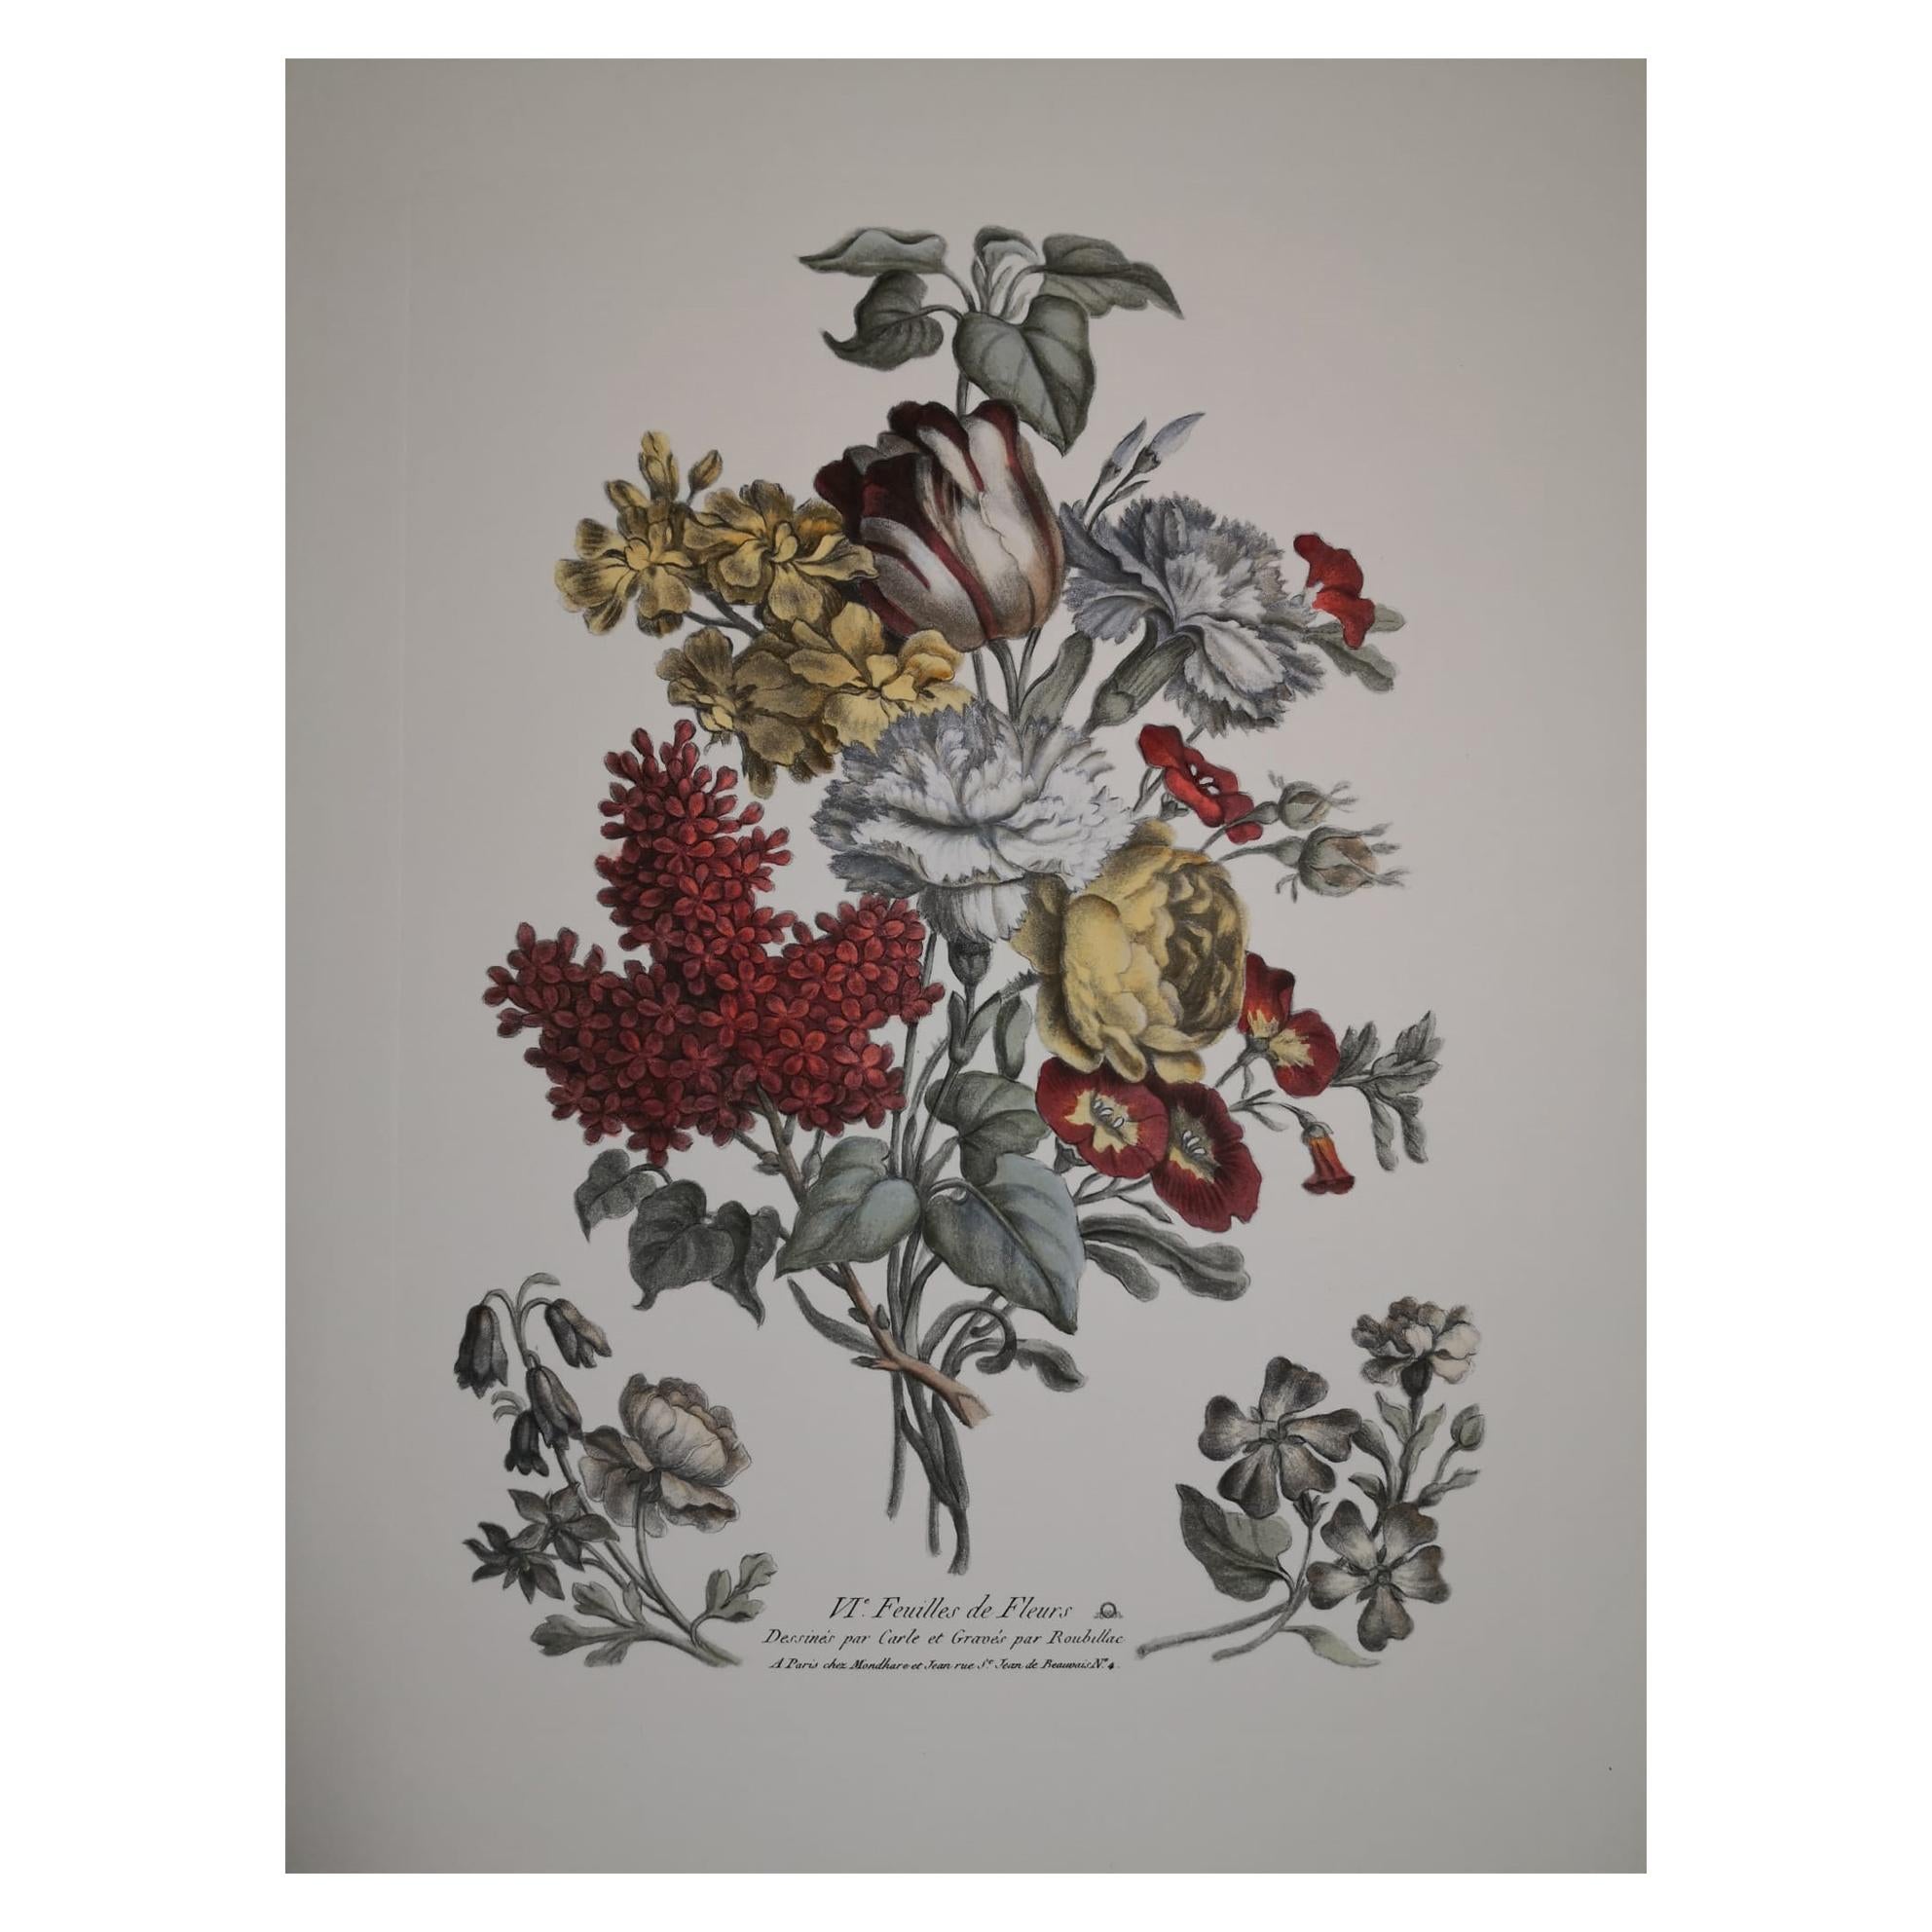 Italian Contemporary Hand Painted Botanical Print  "VI° Feuilles de Fleurs"